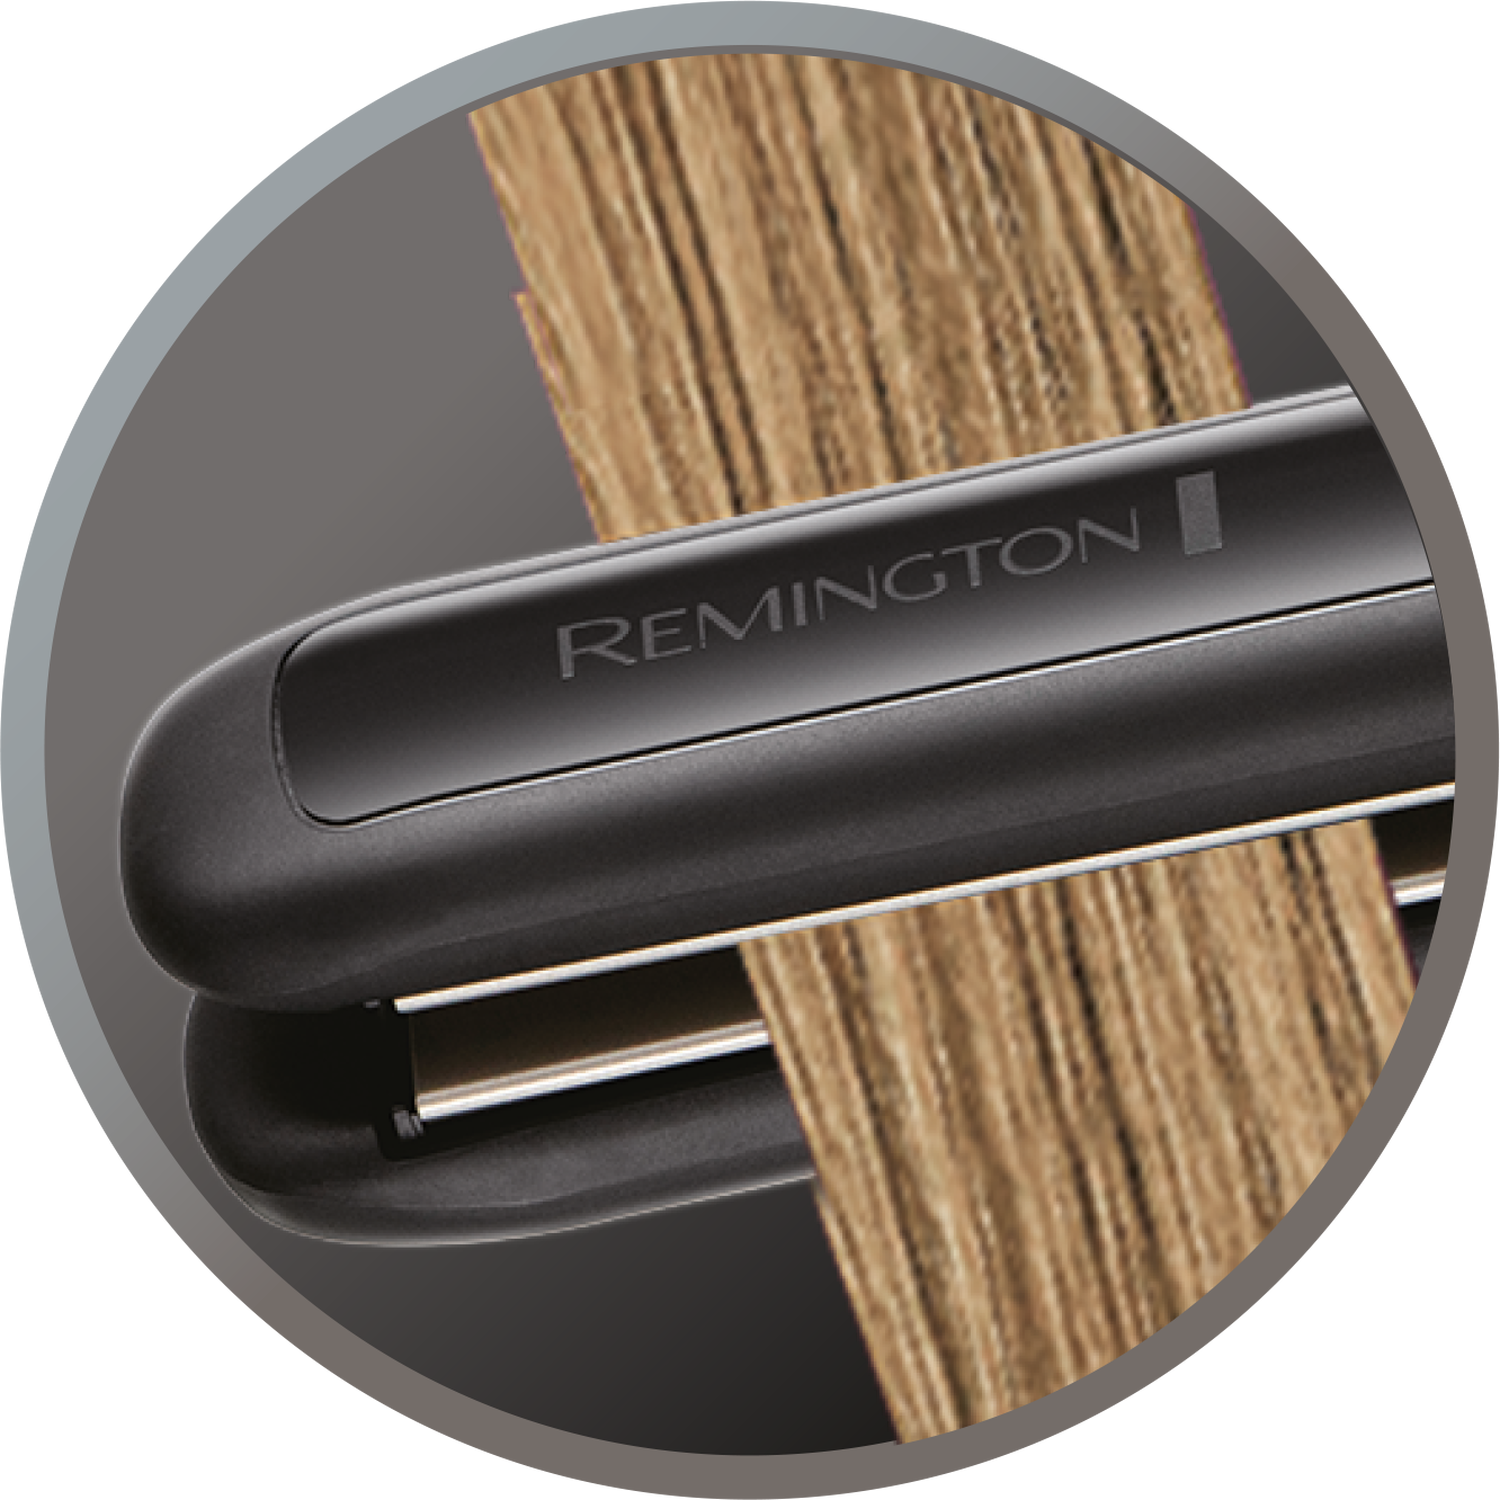 Remington Ceramic Straight Black Hair Straightener Image 3